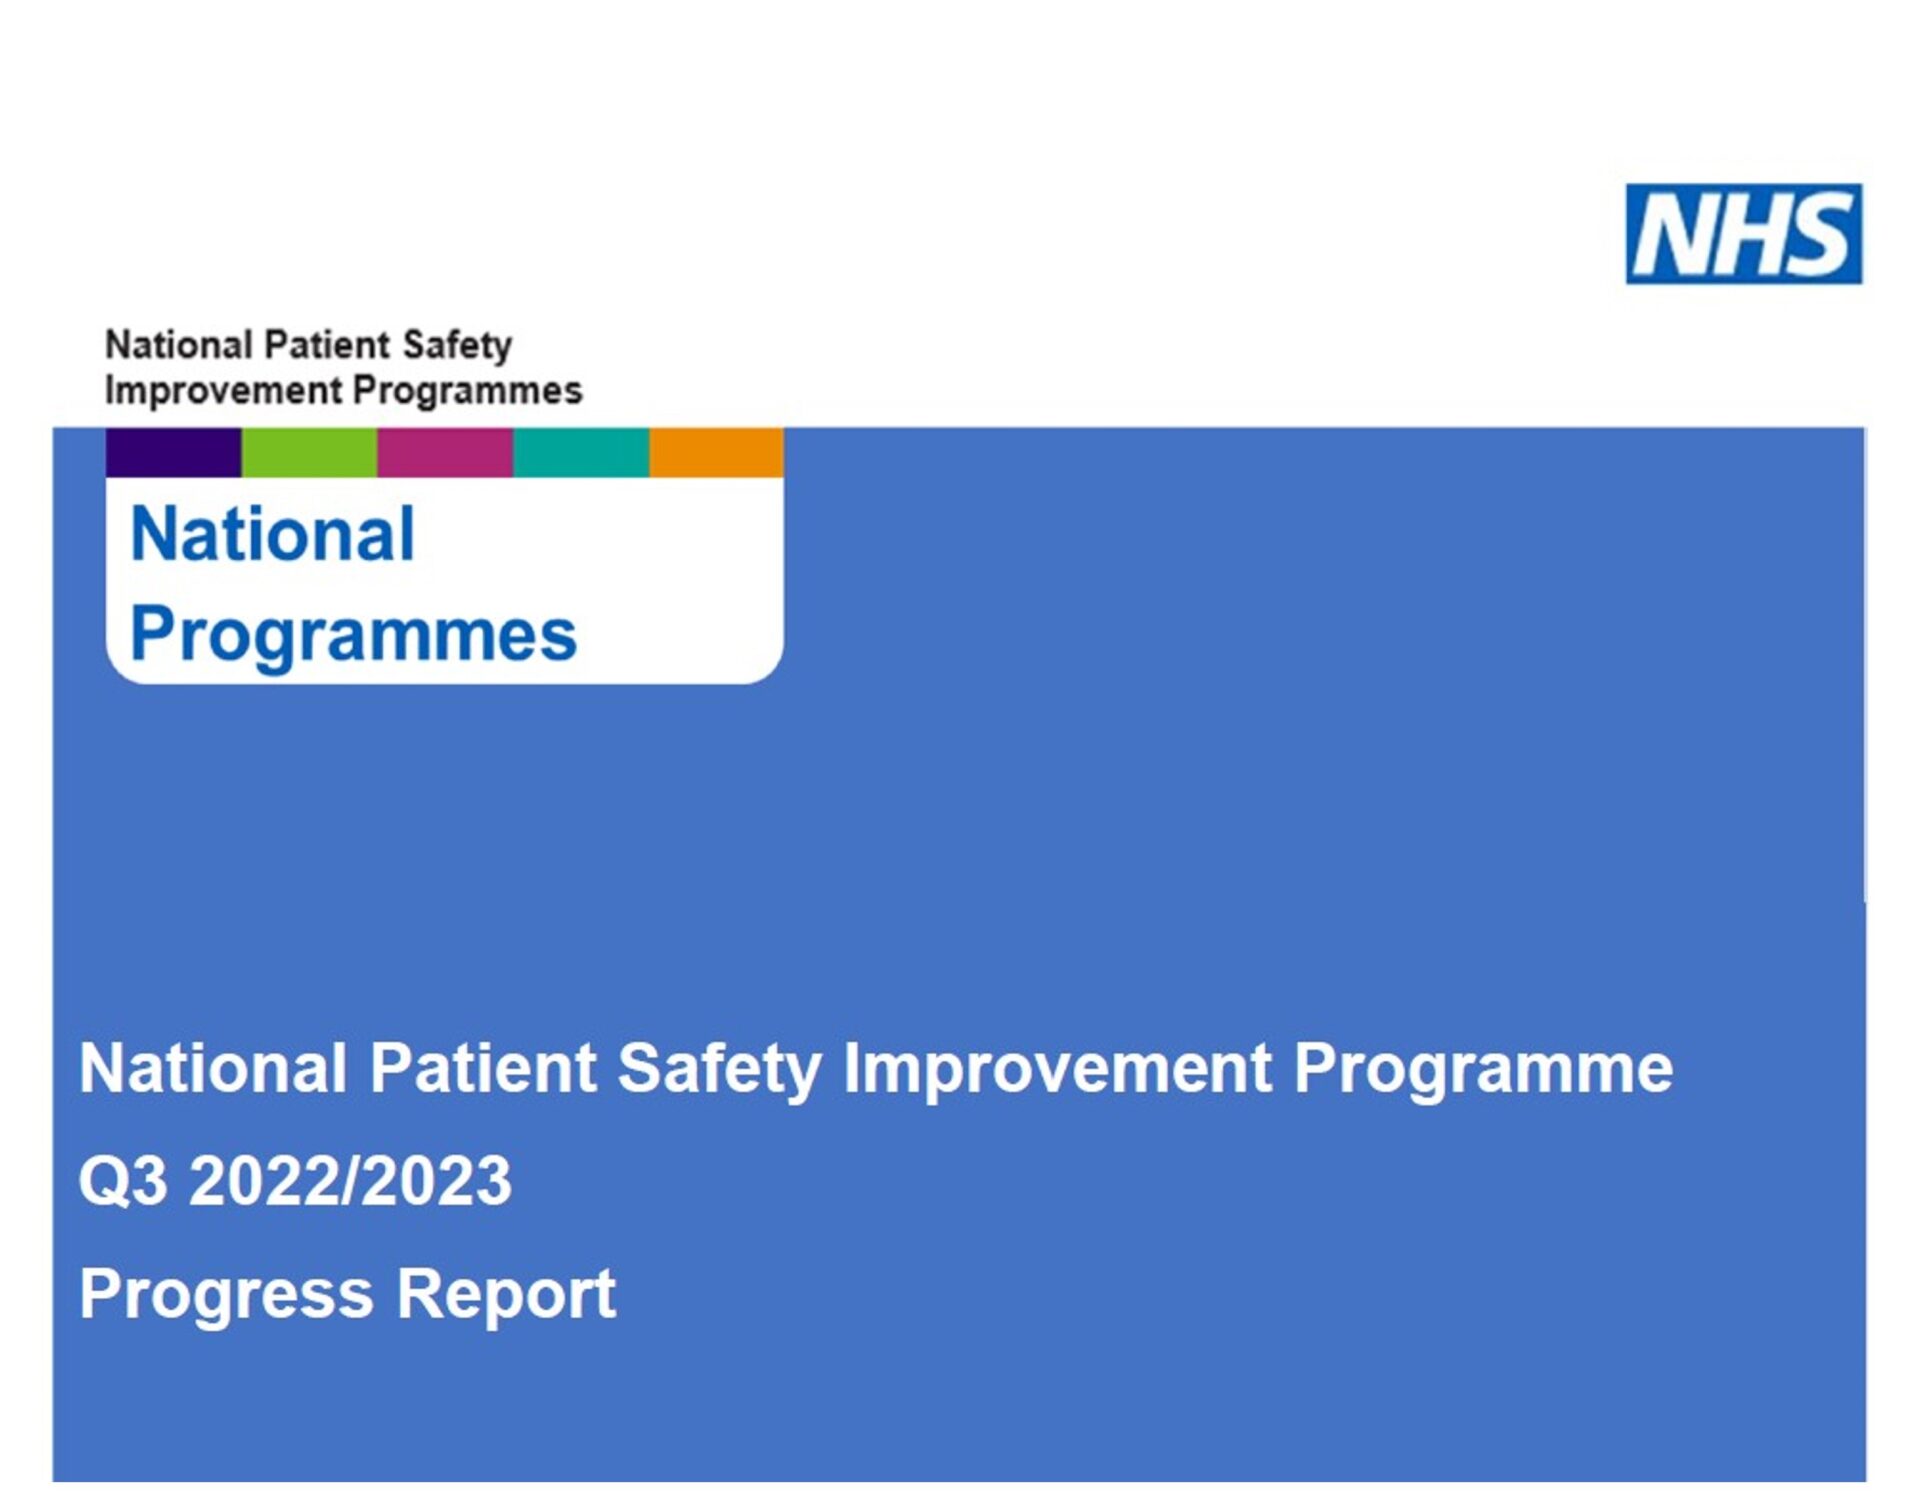 National Patient Safety Improvement Programme progress report